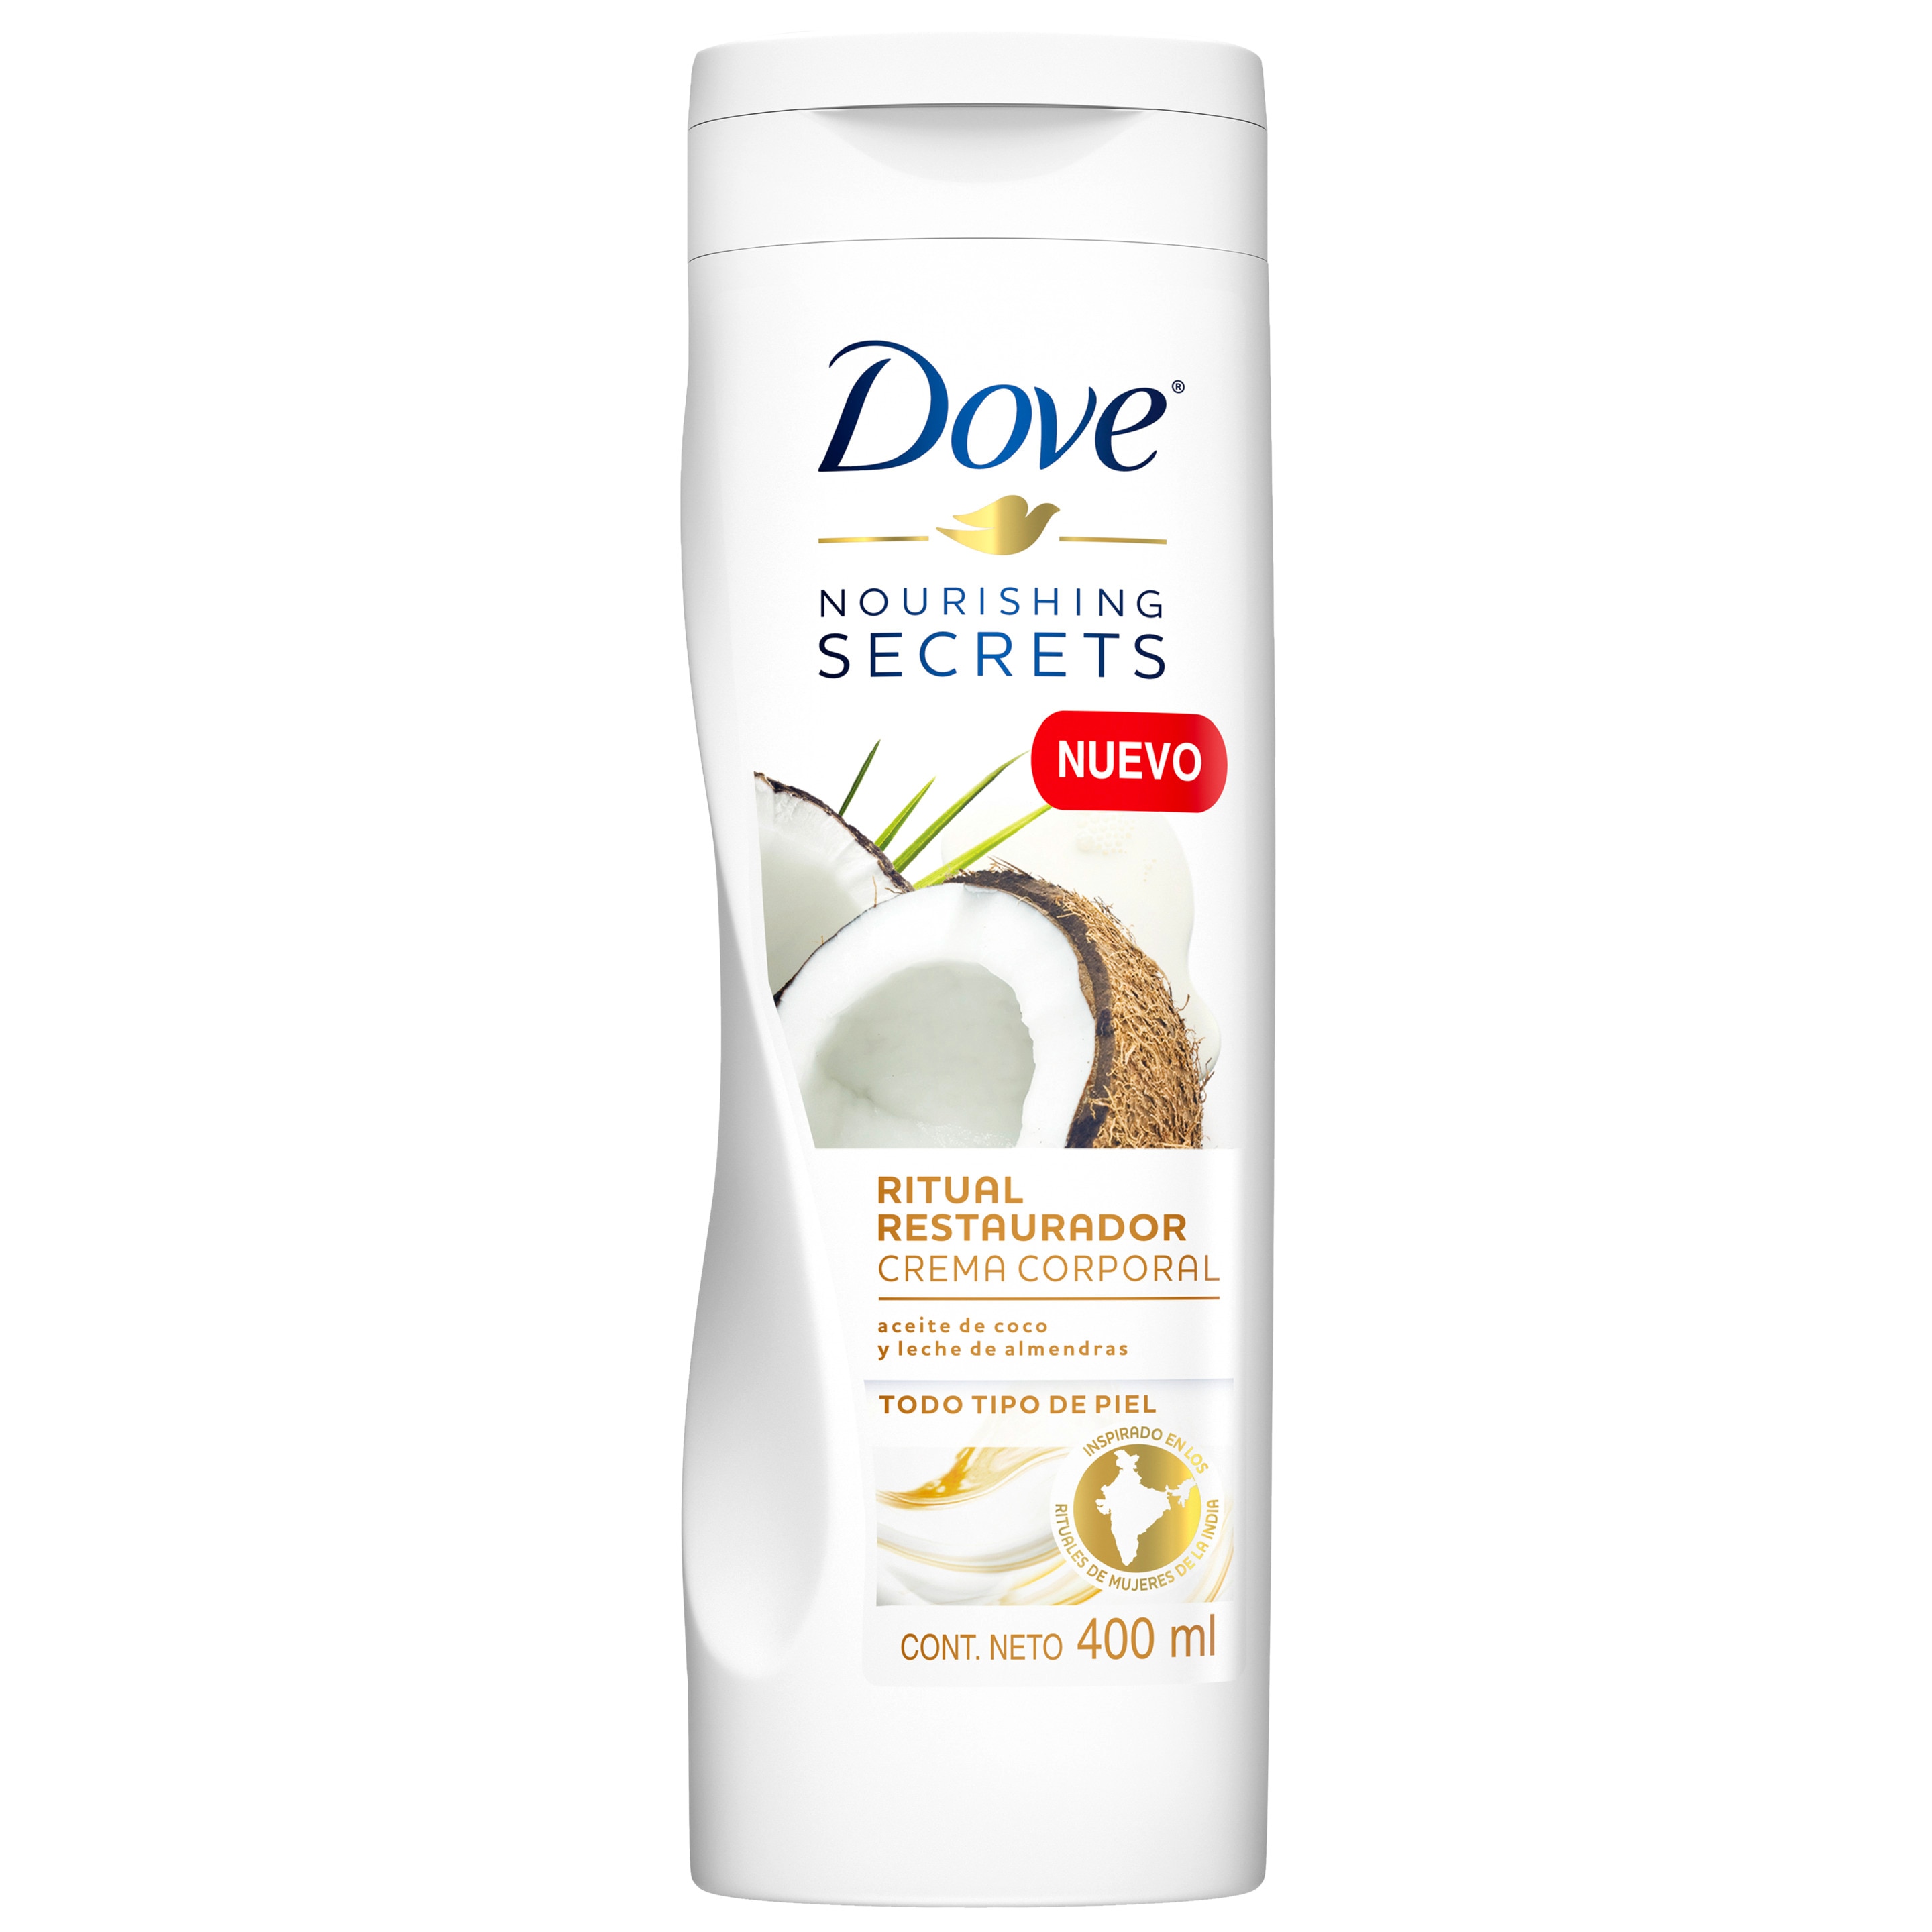 Imagen de envase Dove Crema Corporal Coco Nourishing Secrets 400ml